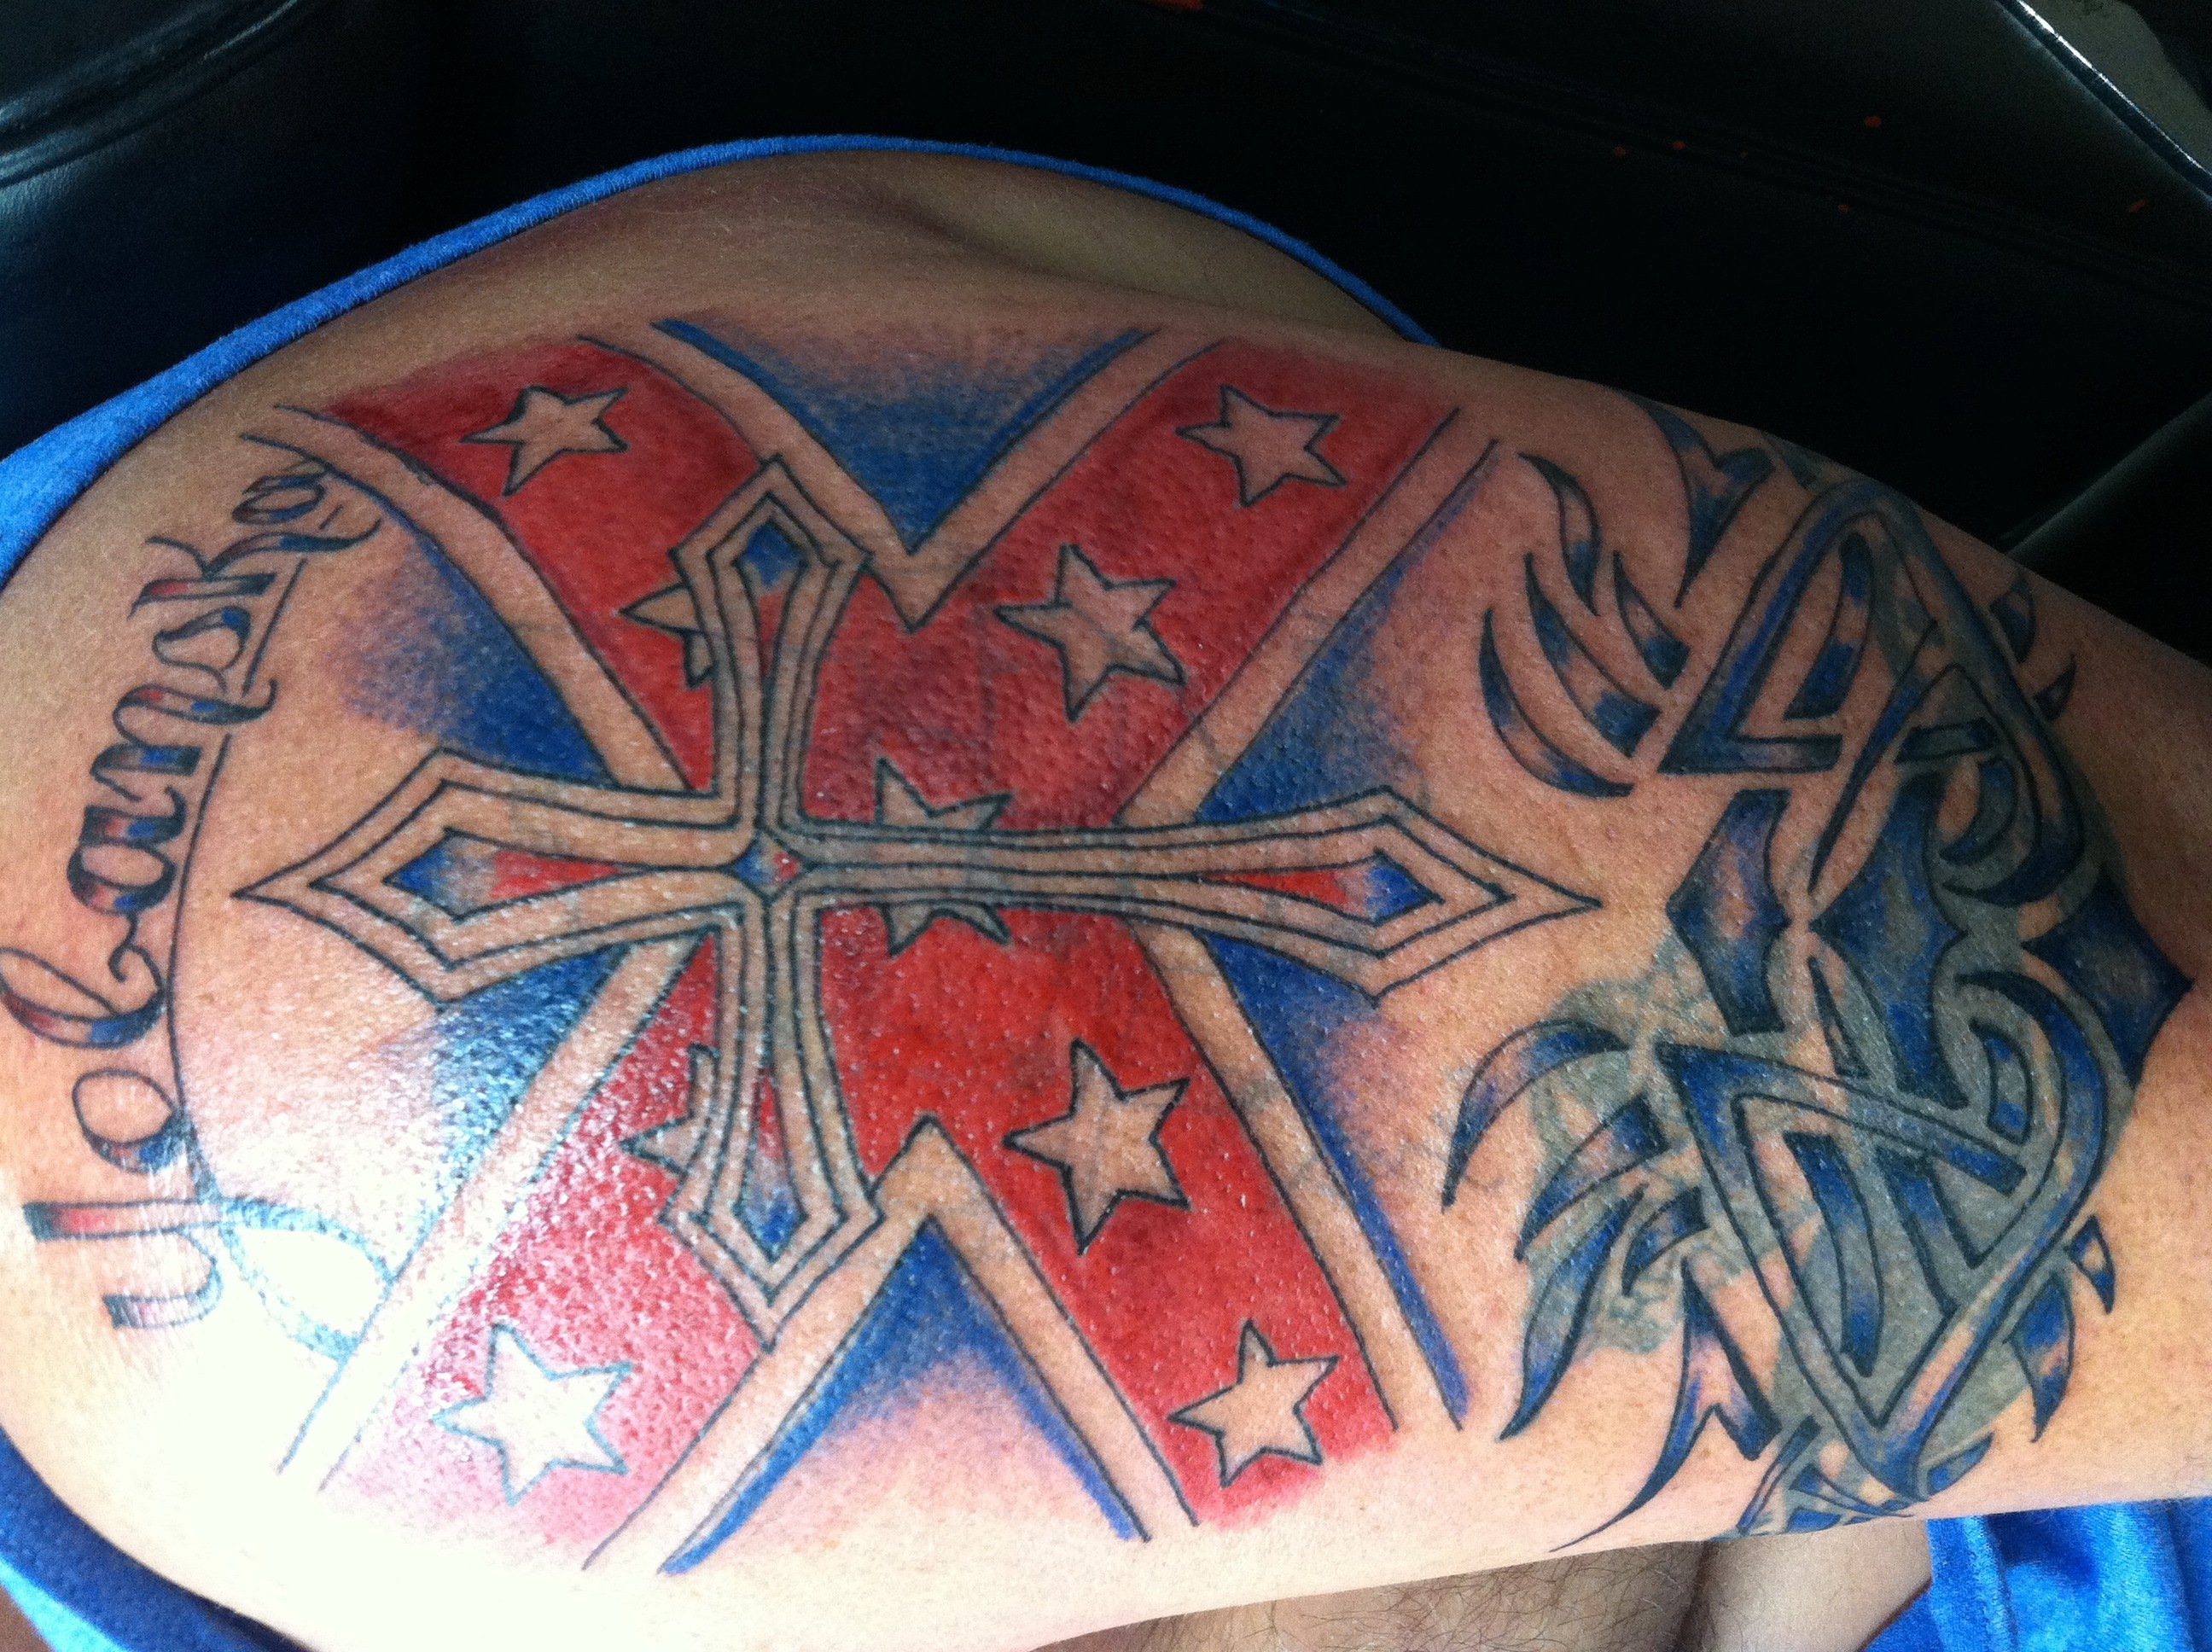 rebel-flag-tattoo-wallpaper-wp6408989